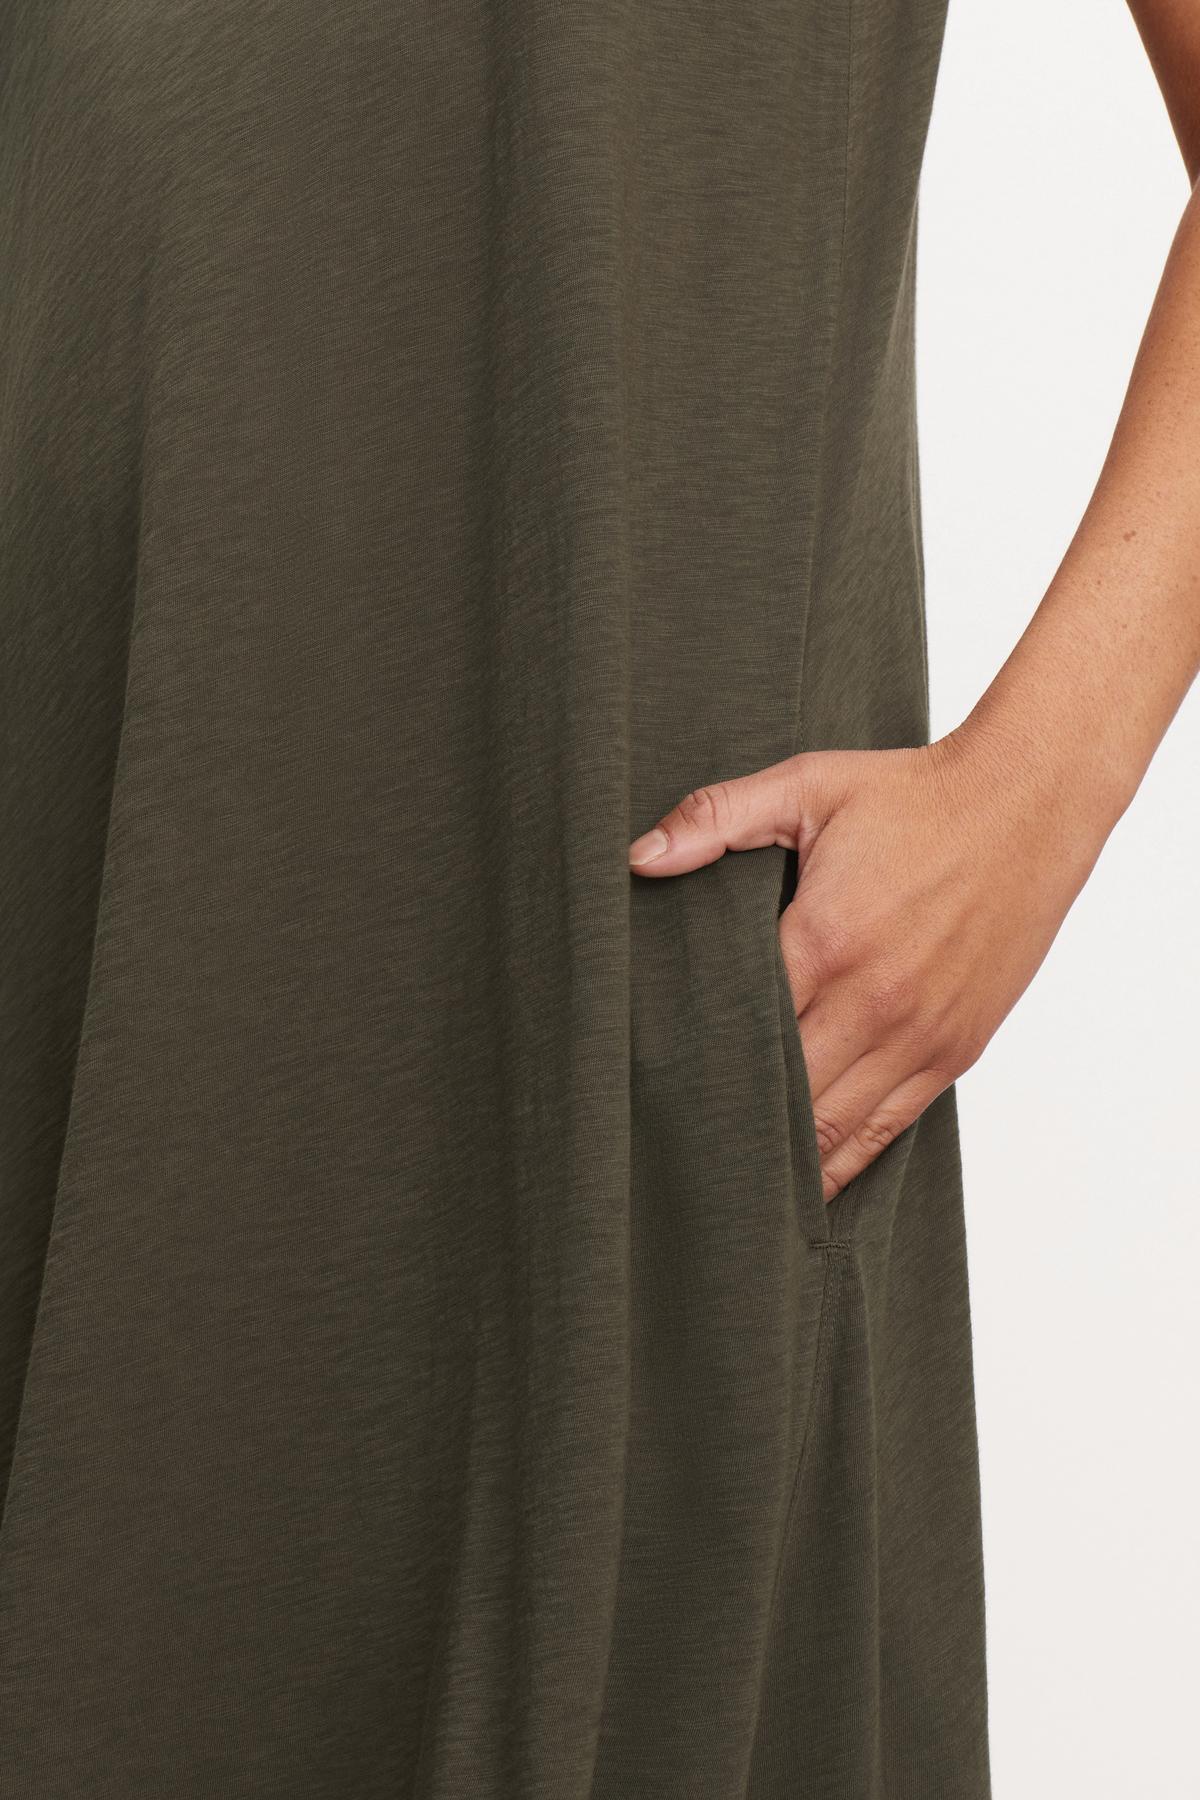 Women's Long Sleeve Shift Dress - Knox Rose Multi Stripe XL